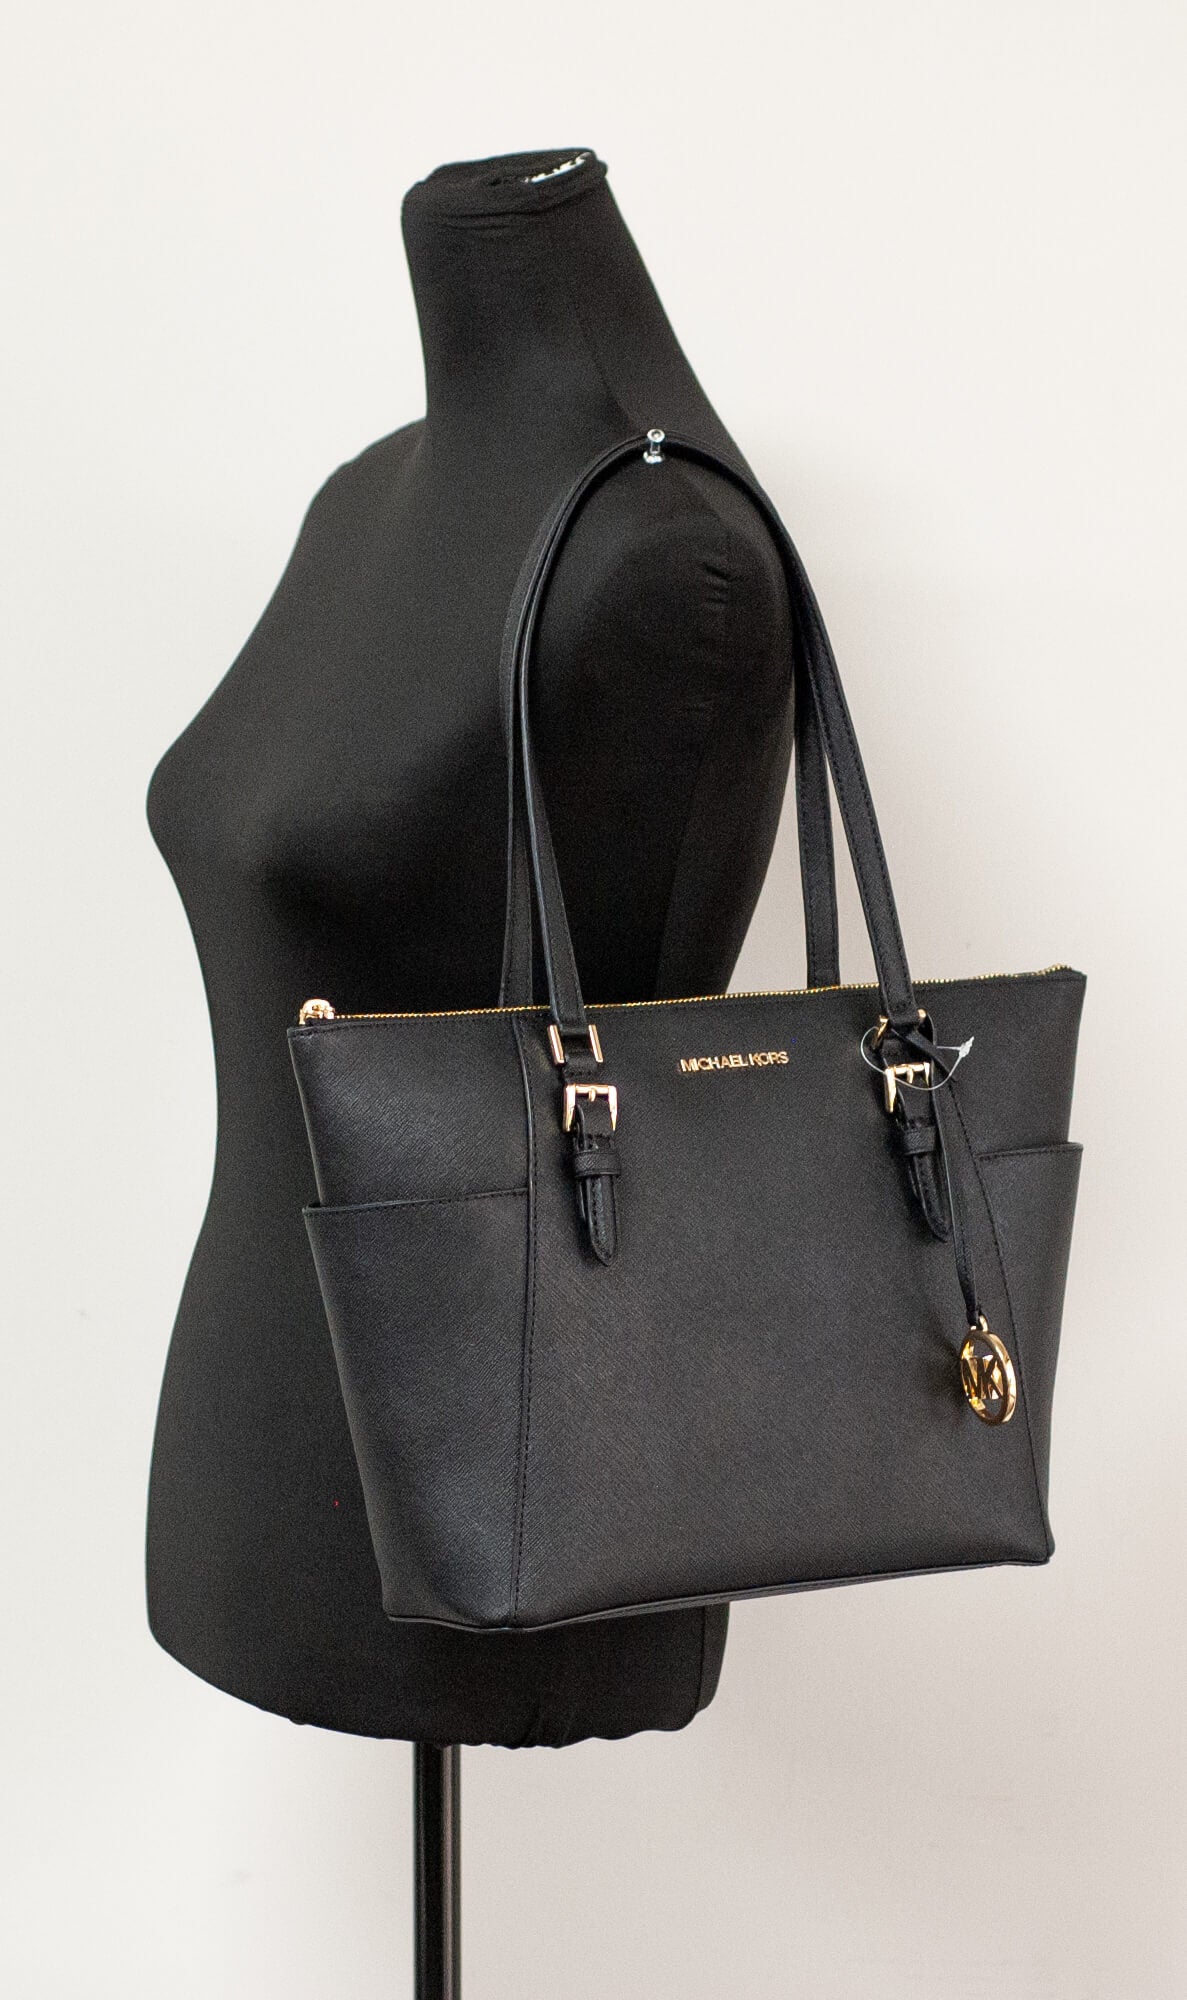 Michael Kors Charlotte Solid Black Leather Large Top Zip Tote Handbag Bag Purse